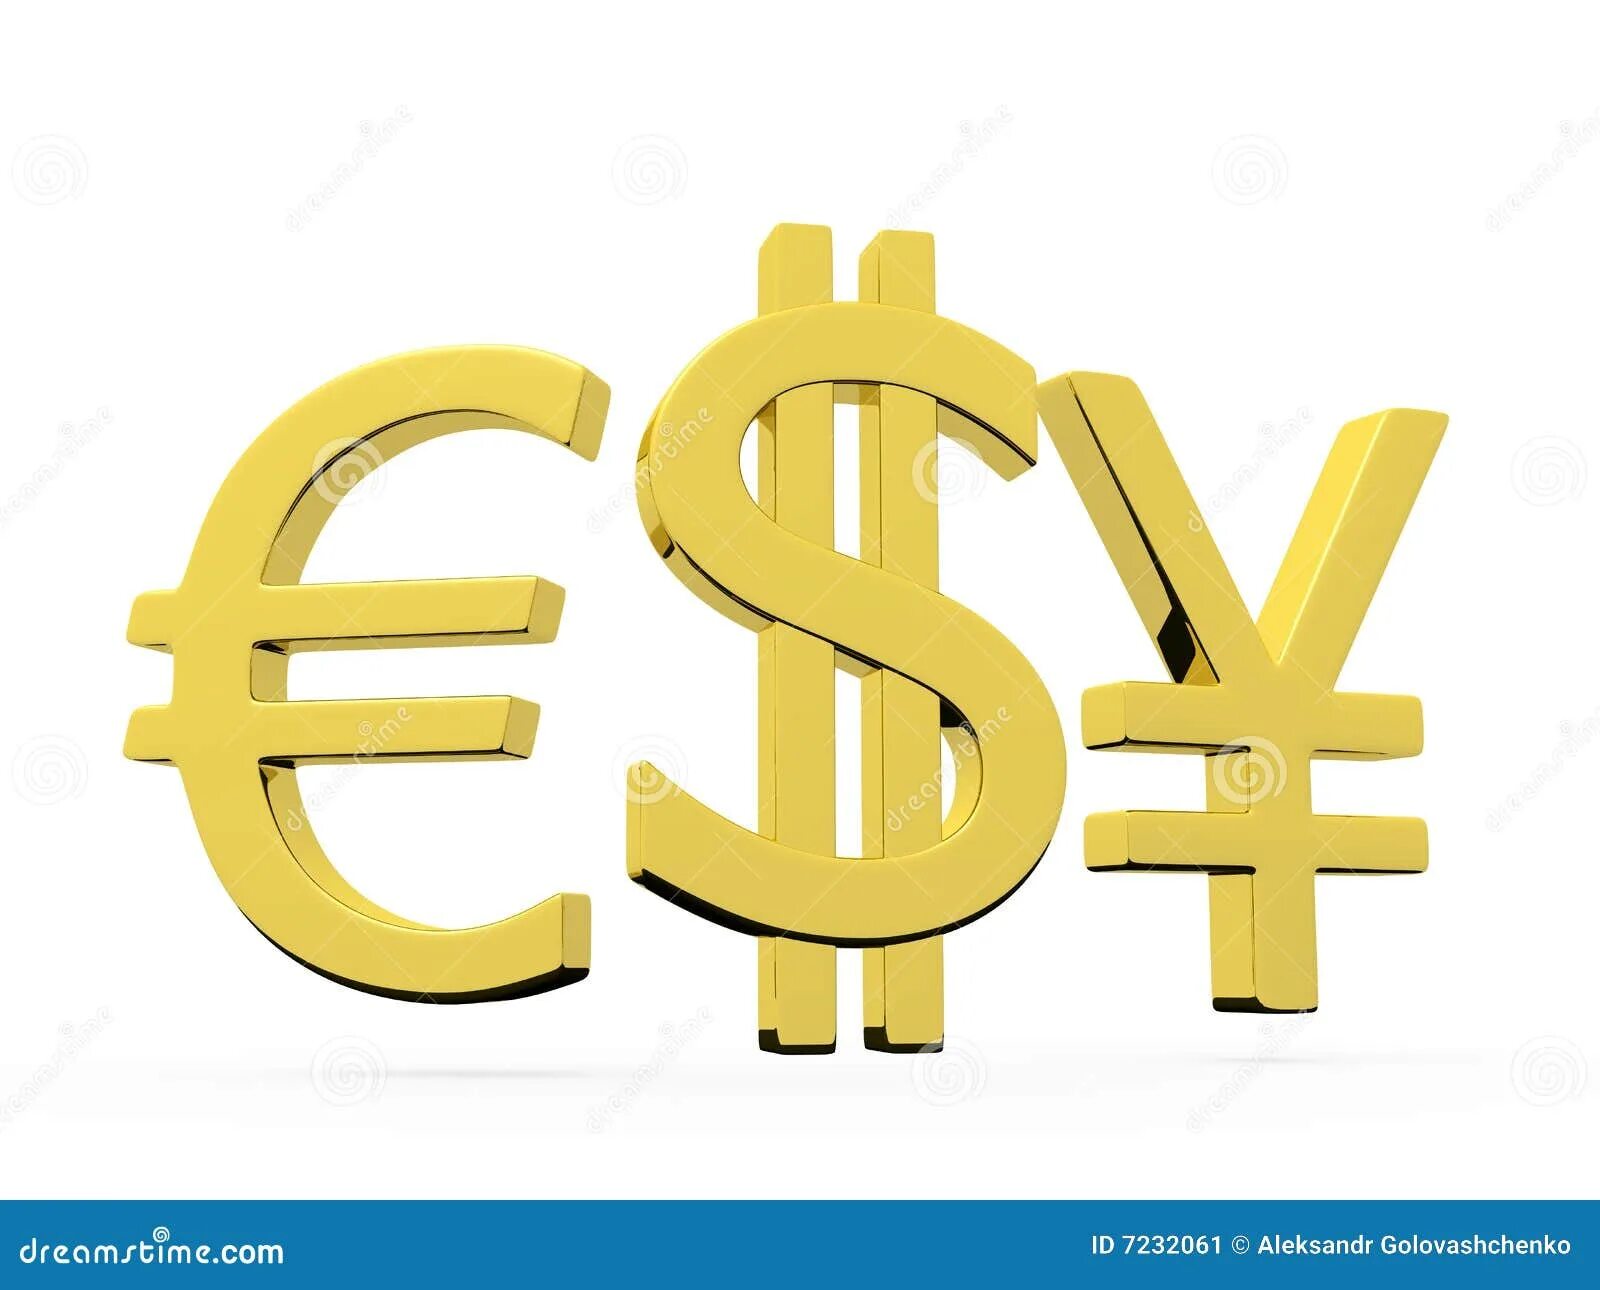 Йена евро доллар. Знак доллара и евро. Значок евро и доллара. Евро-йена-до доллар.